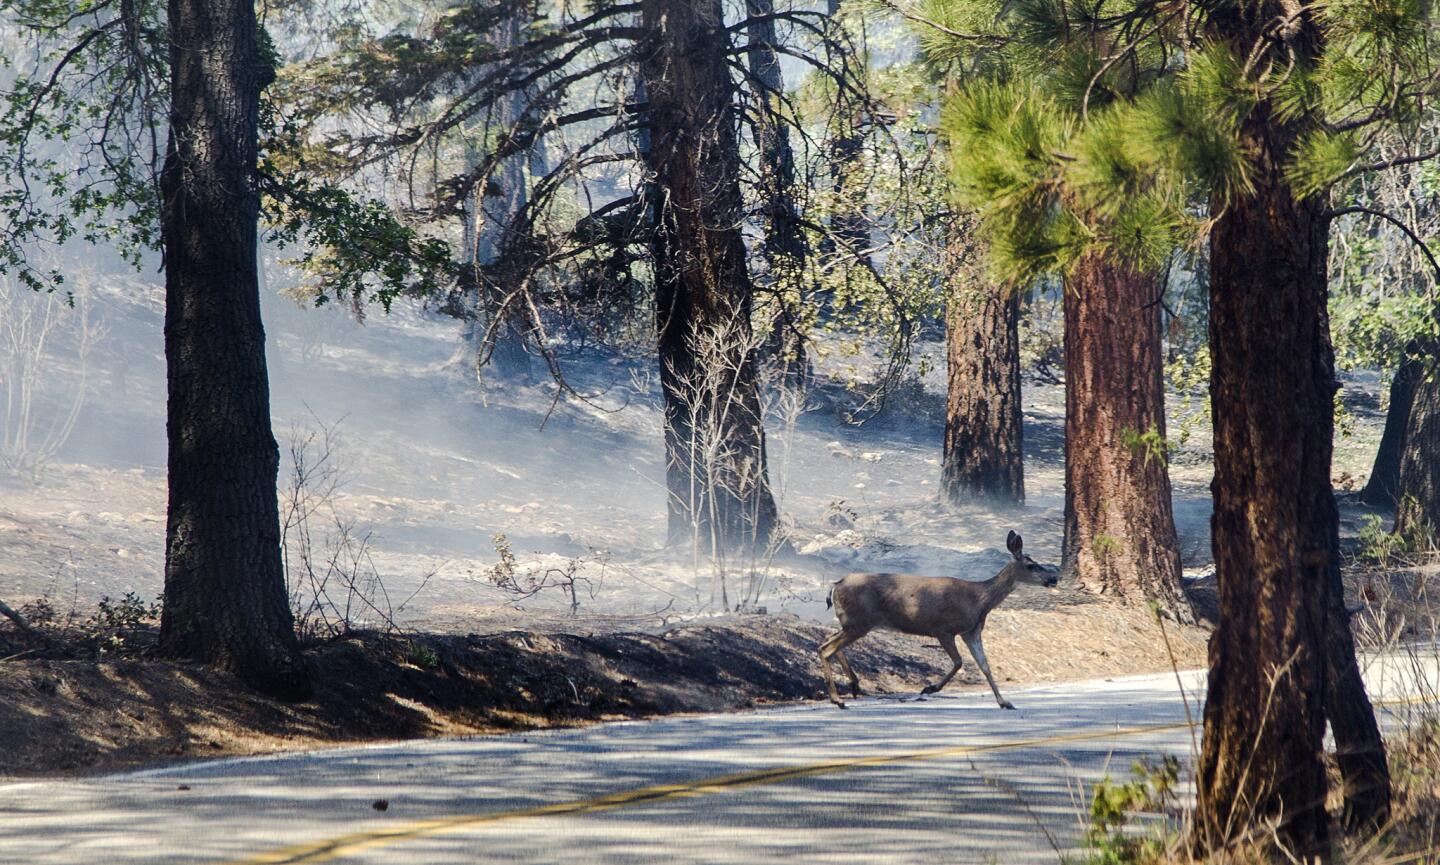 Lake fire in the San Bernardino National Forest